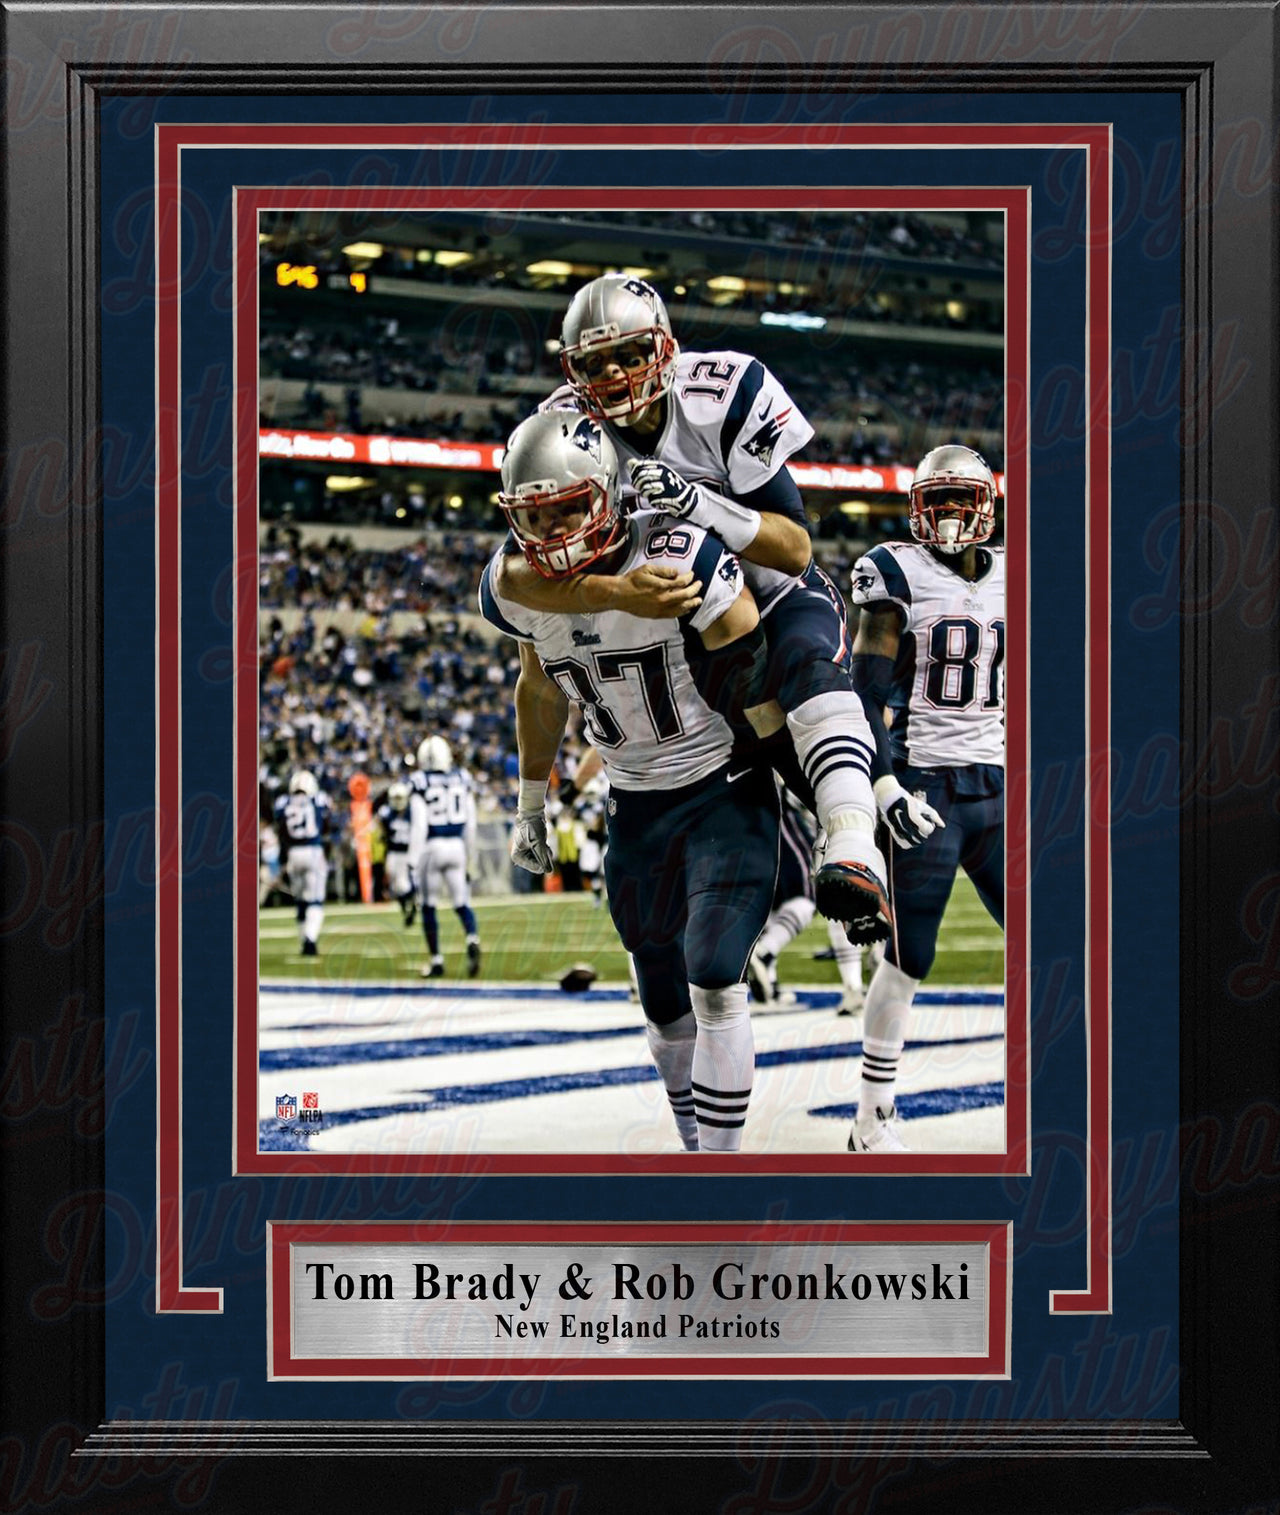 Tom Brady & Rob Gronkowski New England Patriots 8" x 10" Framed Football Photo - Dynasty Sports & Framing 